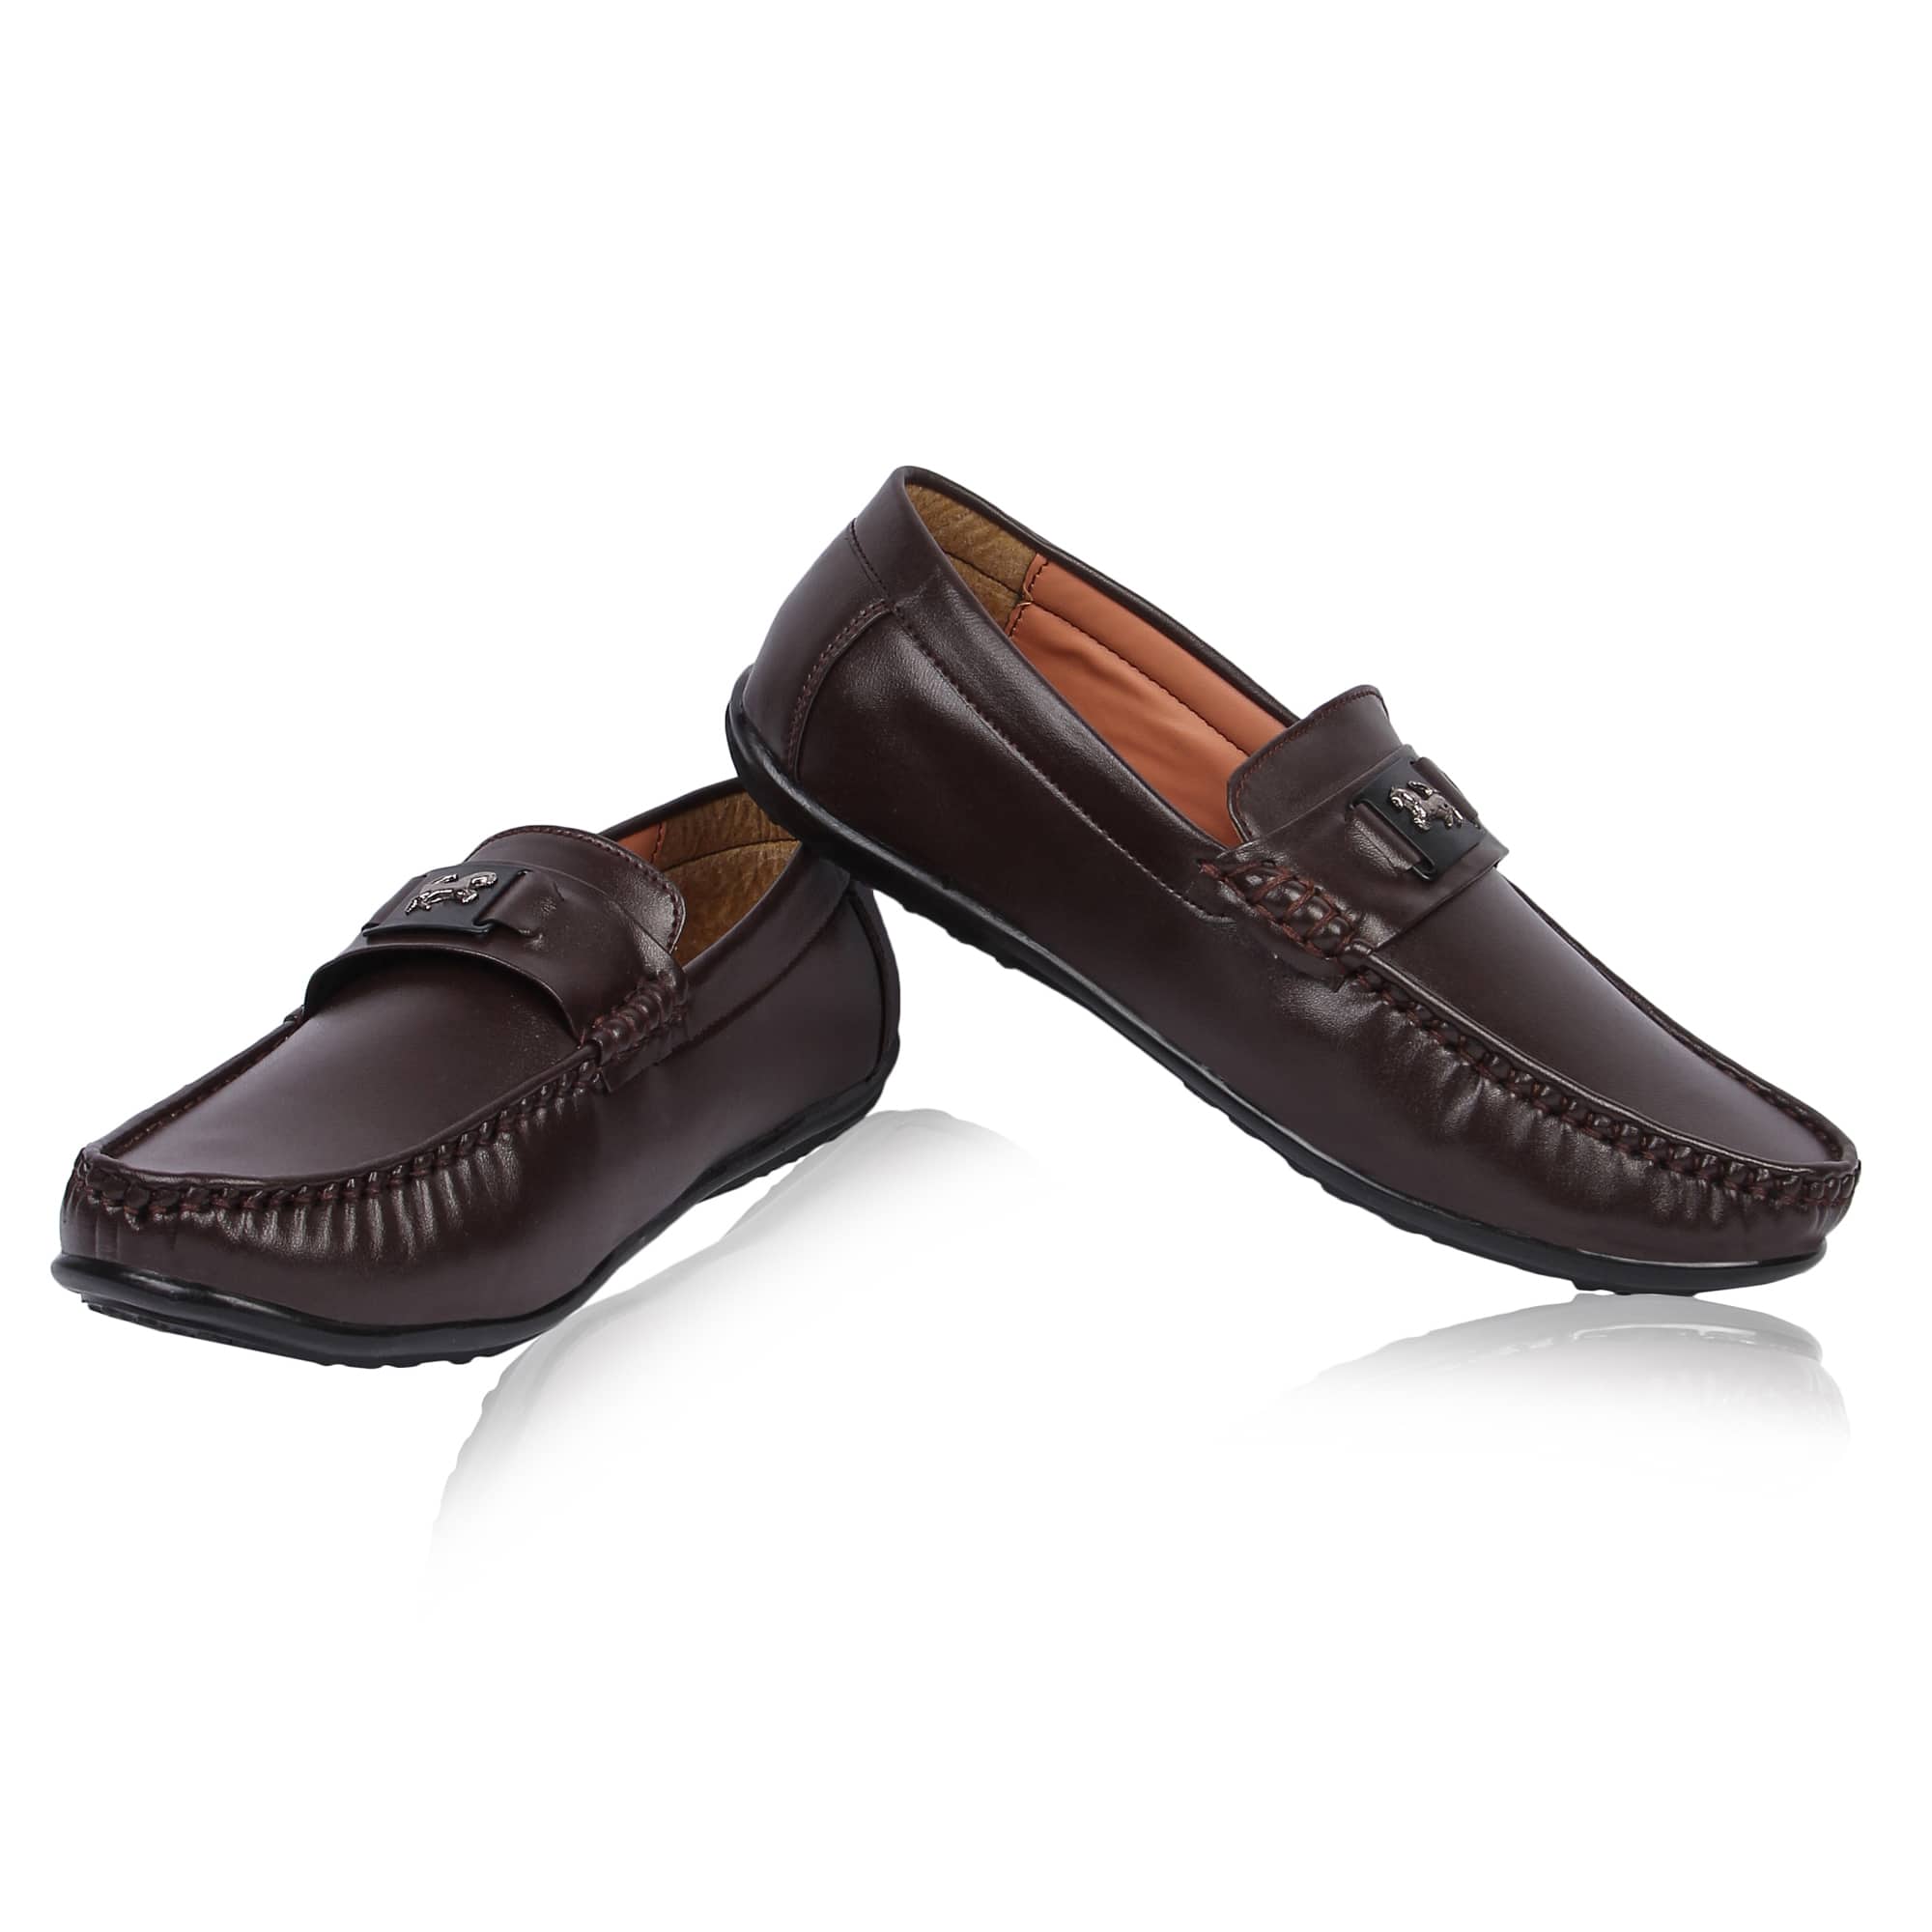 IMG_0041-min | Online Store for Men Footwear in India